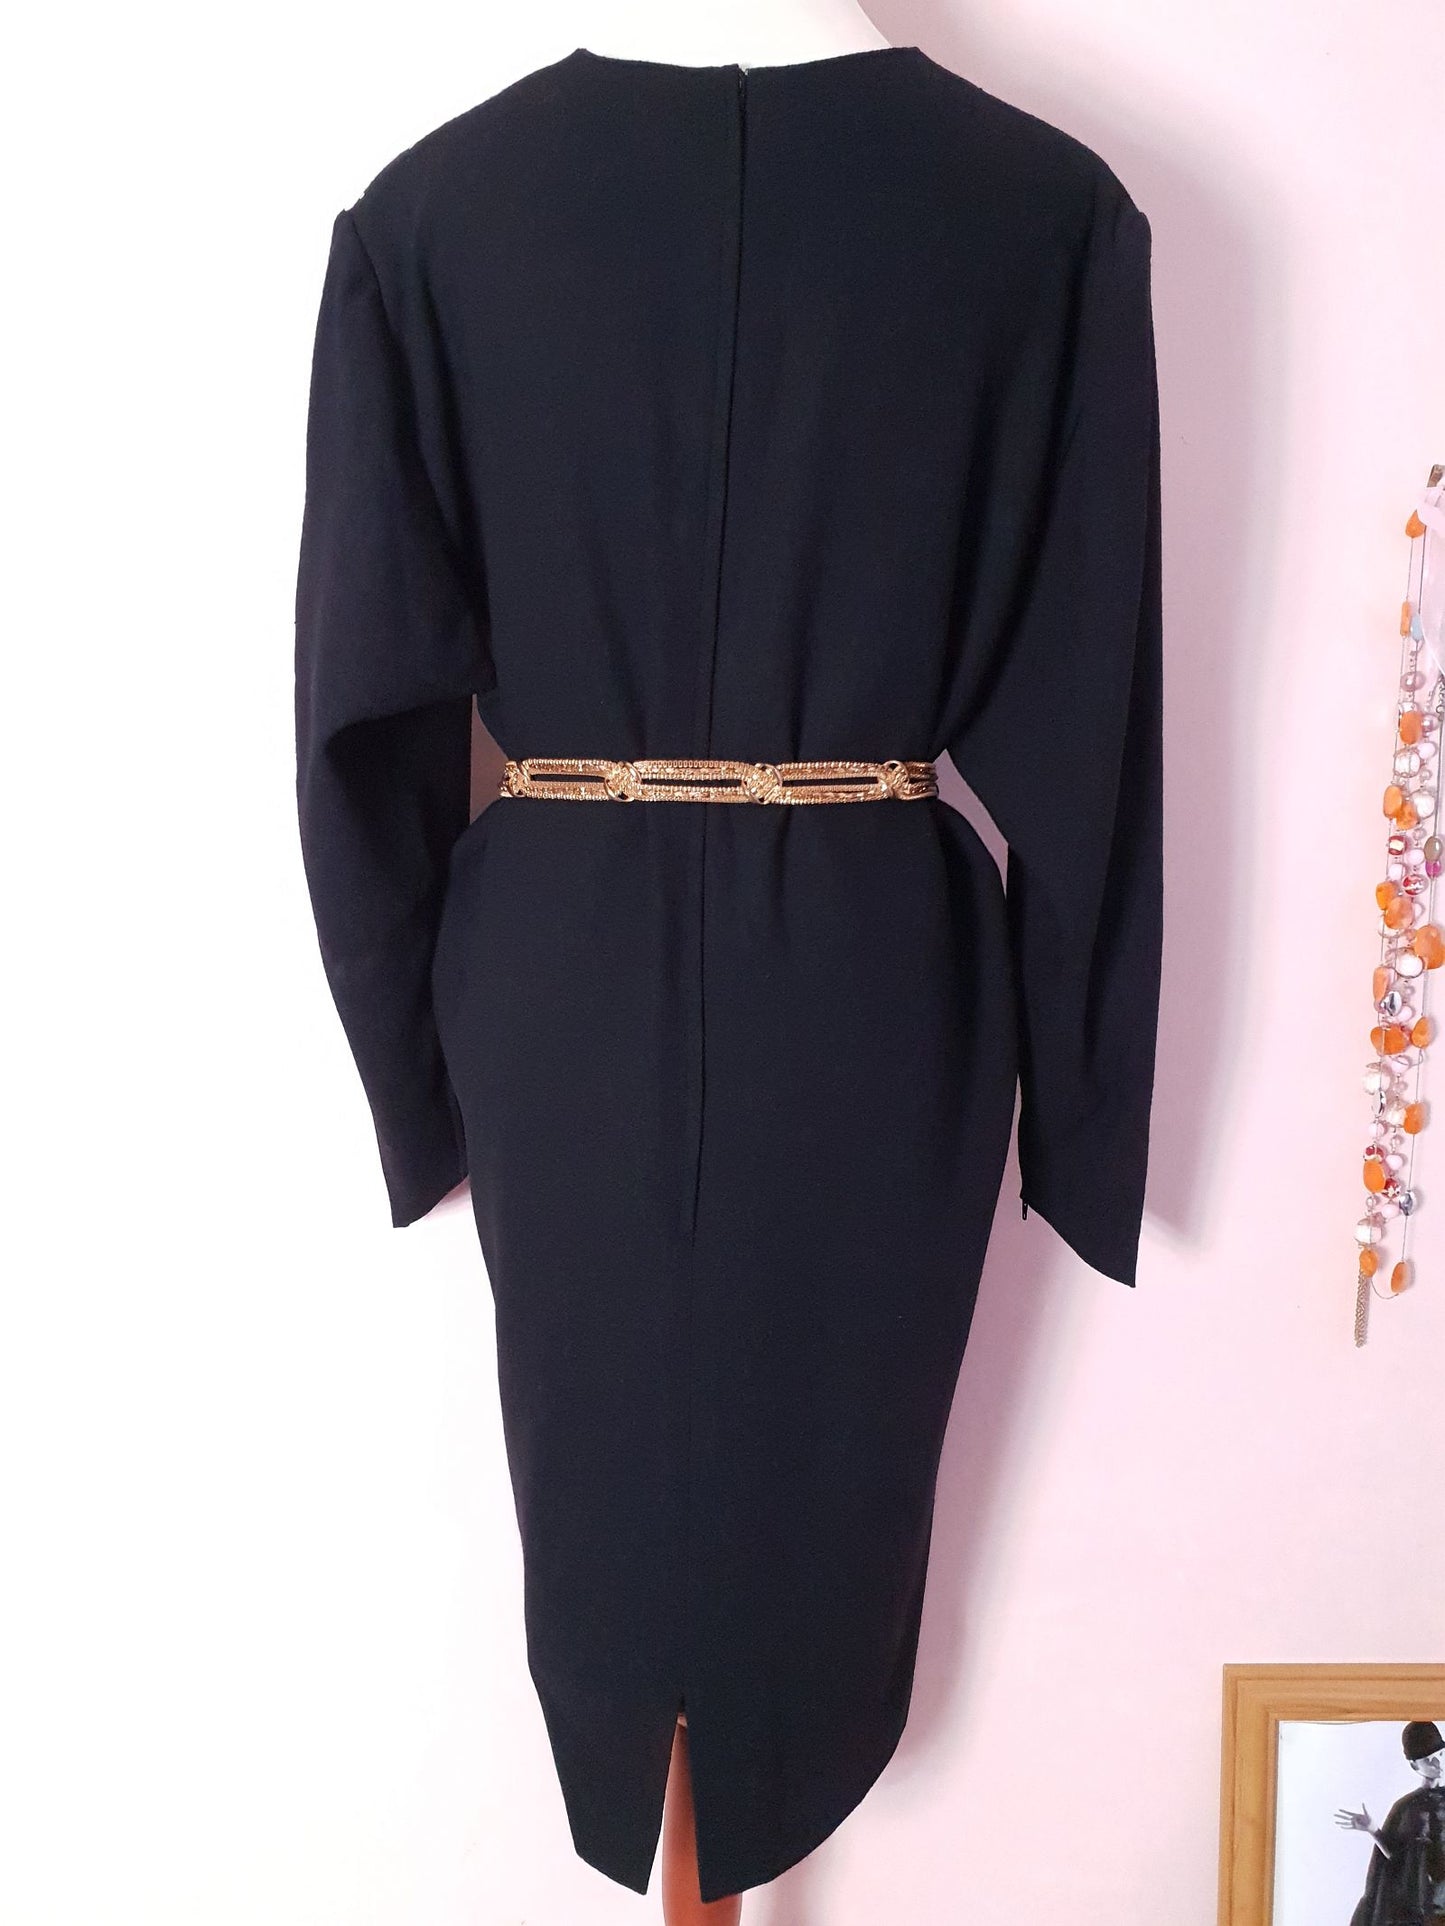 Vintage 1980s Guy Laroche Black Wool Diamante Dress - Size 18